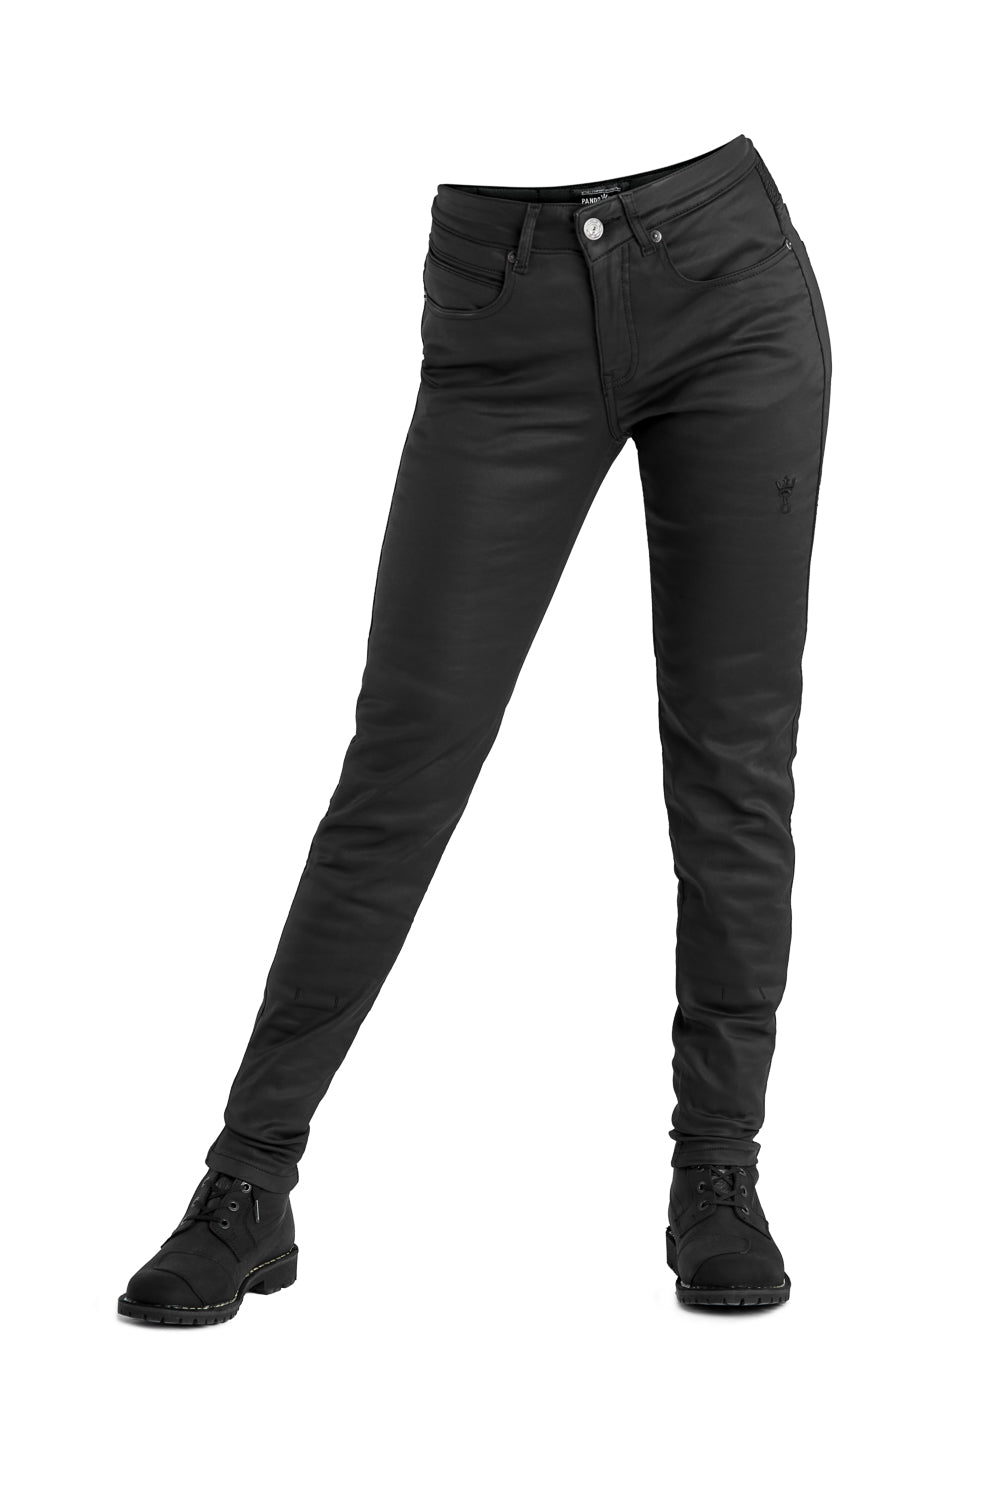 Motorcycle Pants Women - Women's Kevlar Motorcycle Pants - Leather